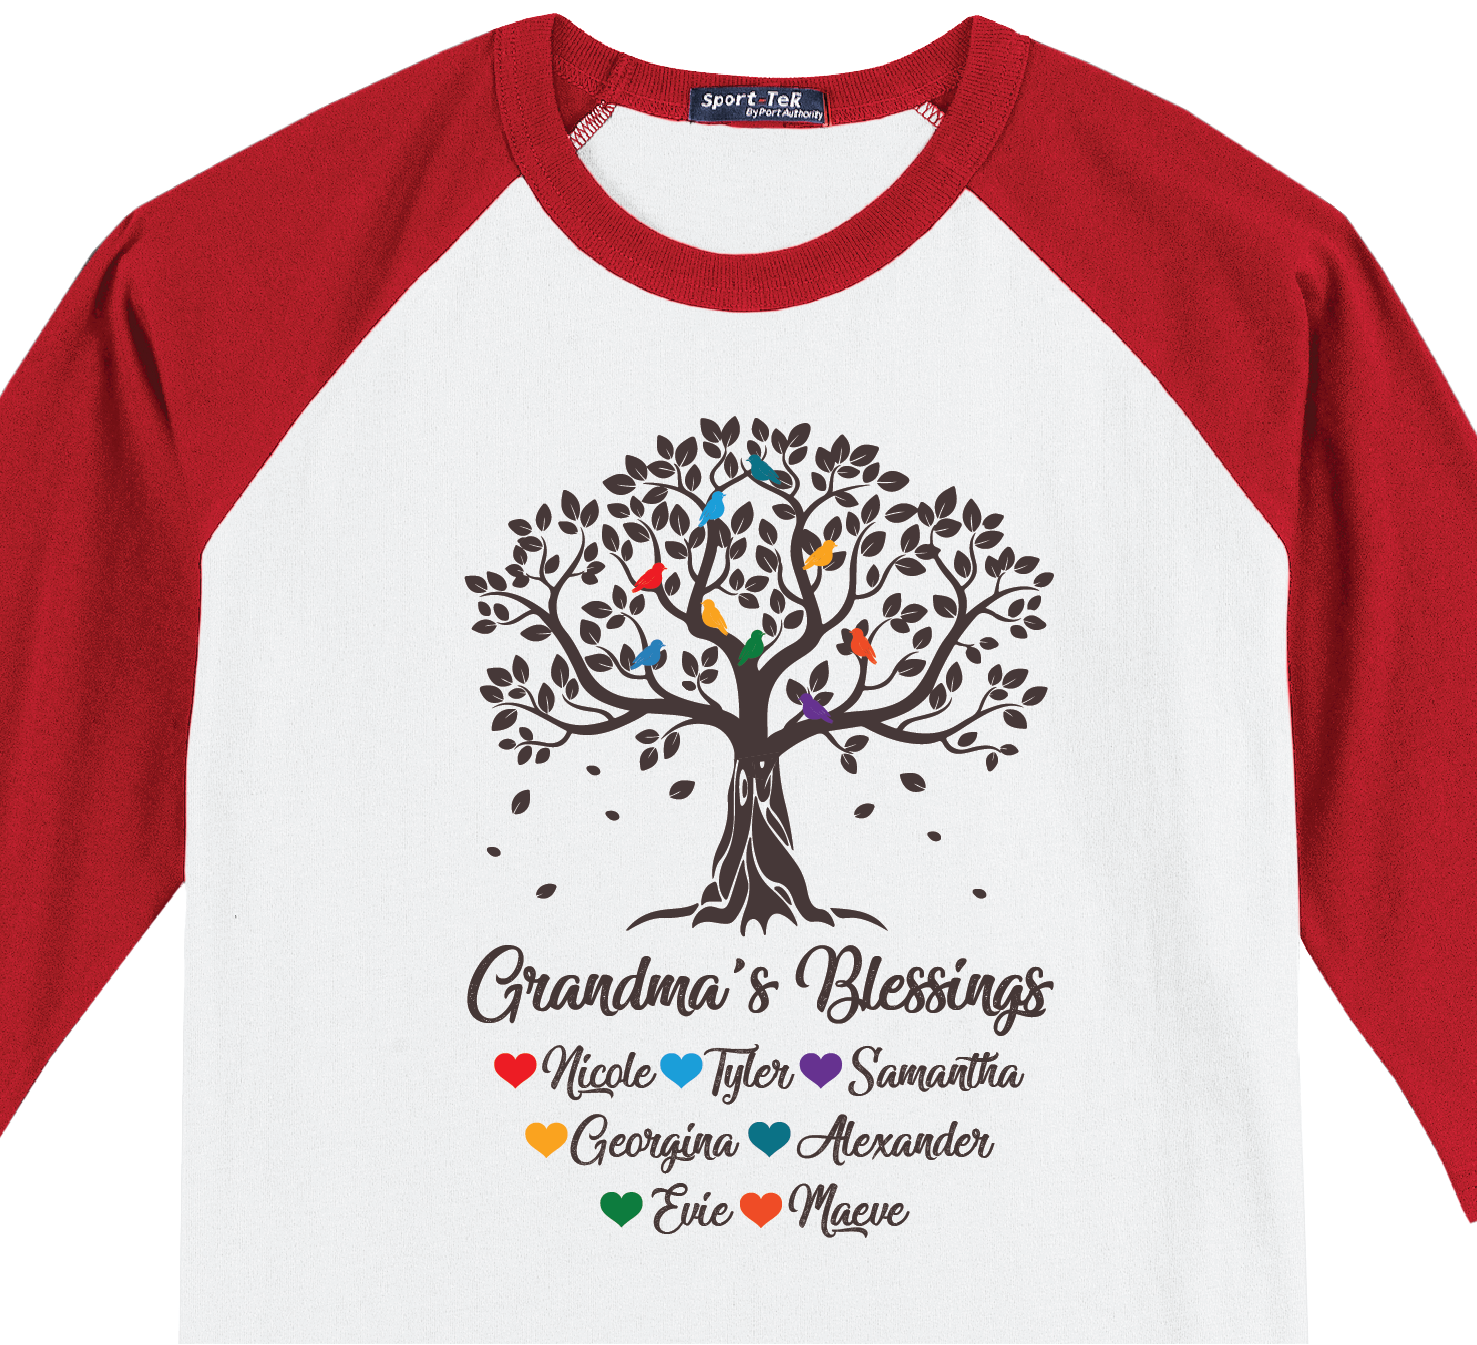 Grandma Tree Blessings Shirts with Grandkids Names